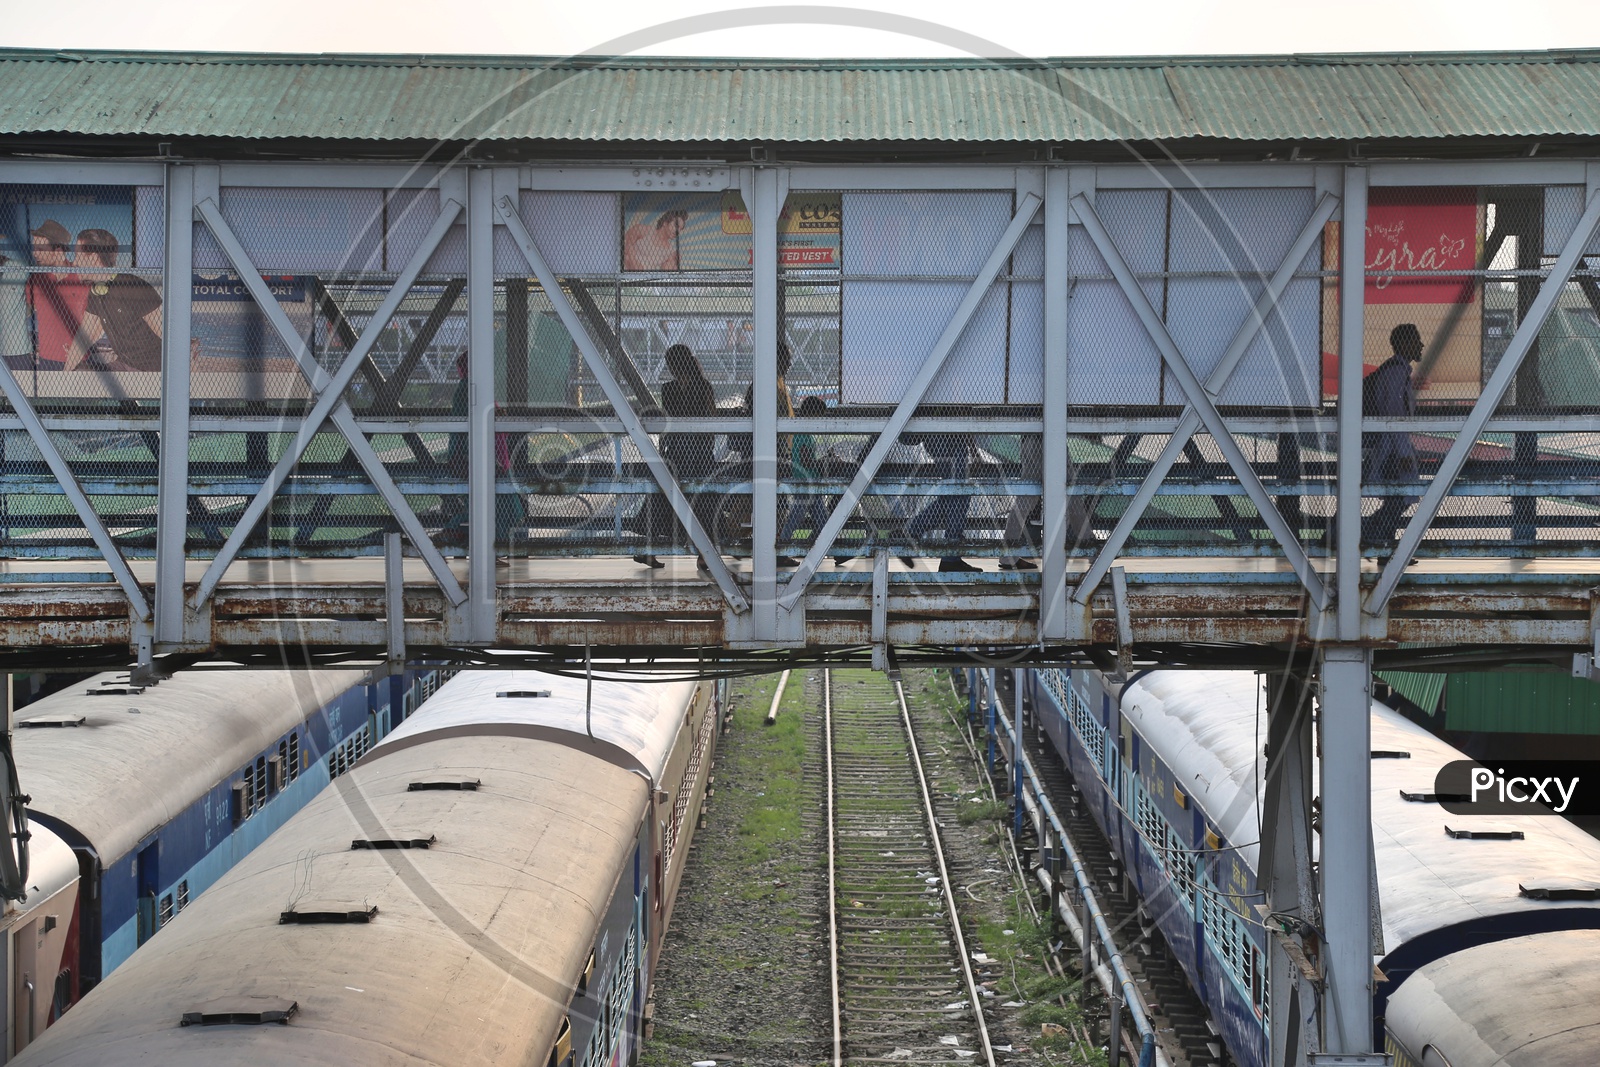 Guwahati Railway station